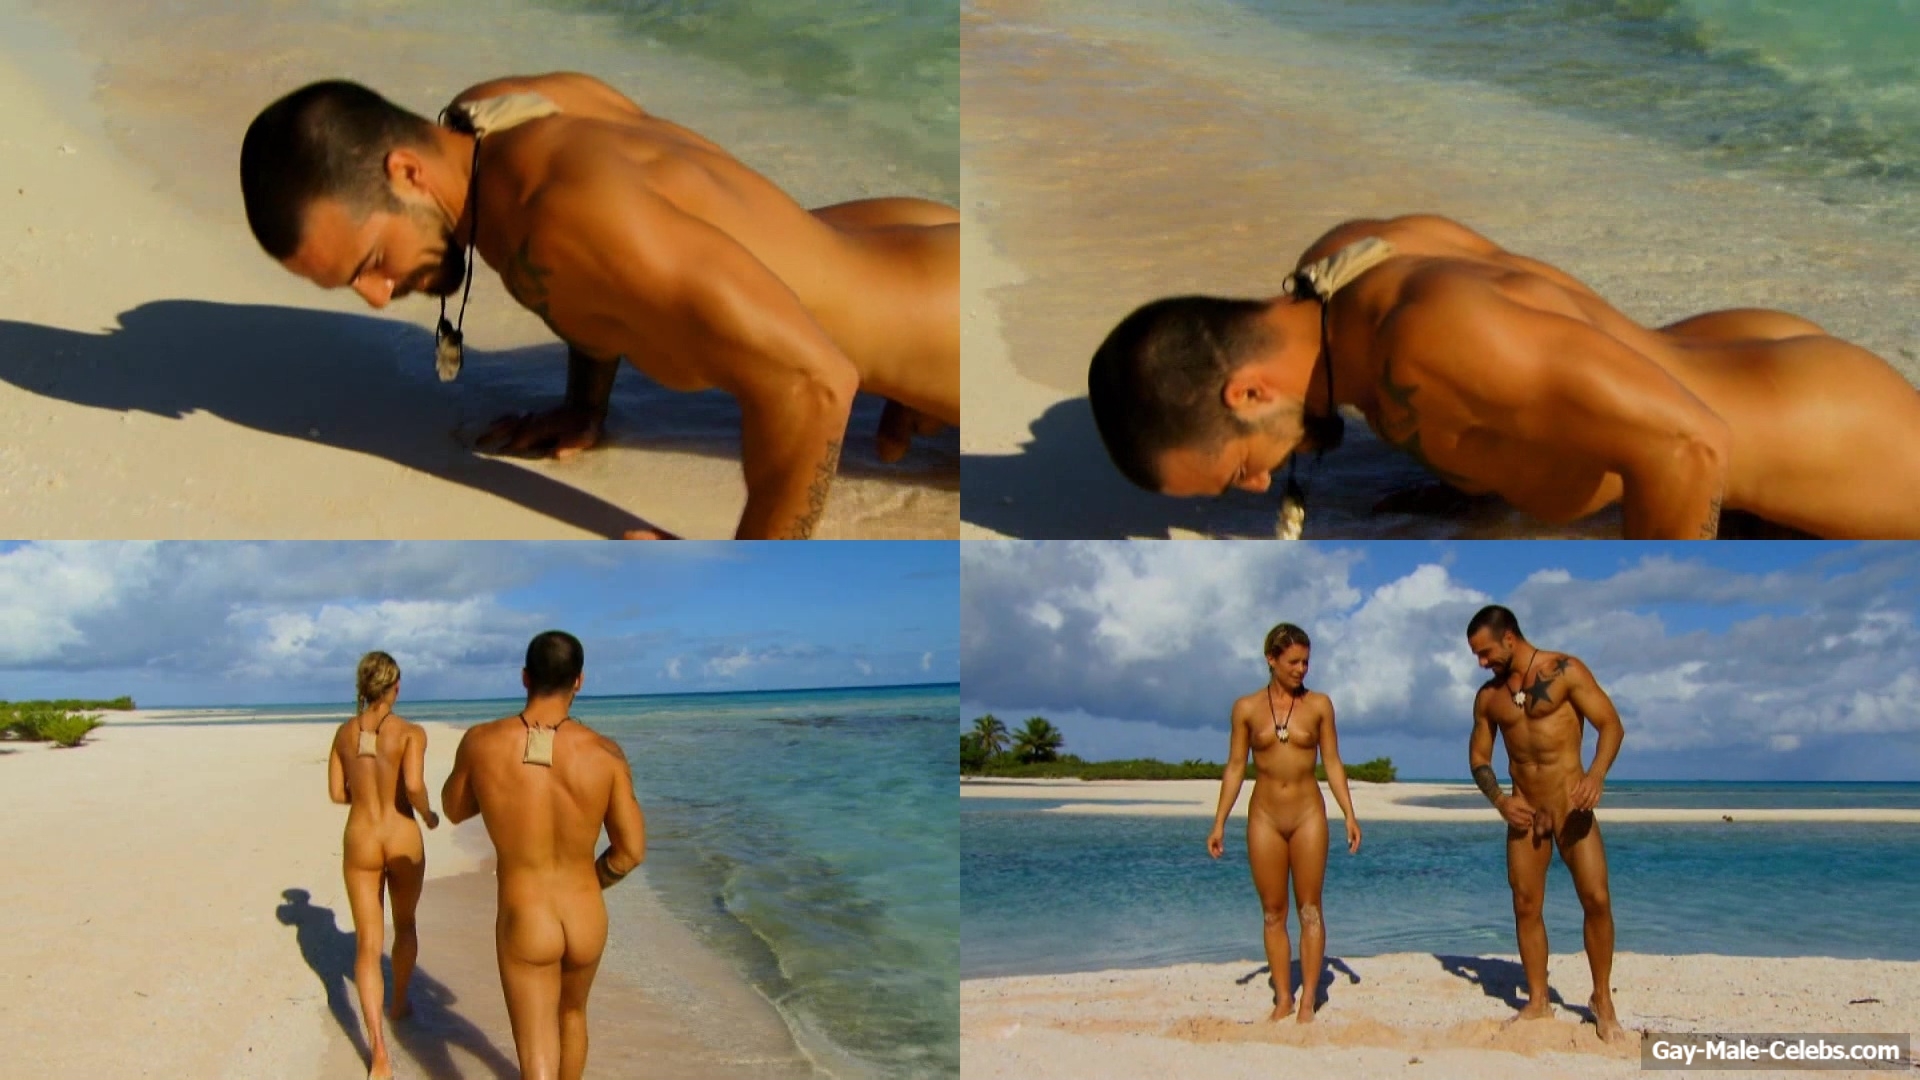 Gaetano Scivoli Full Frontal And Sexy Scenes From Reality TV Show “Adam Sucht Eva”